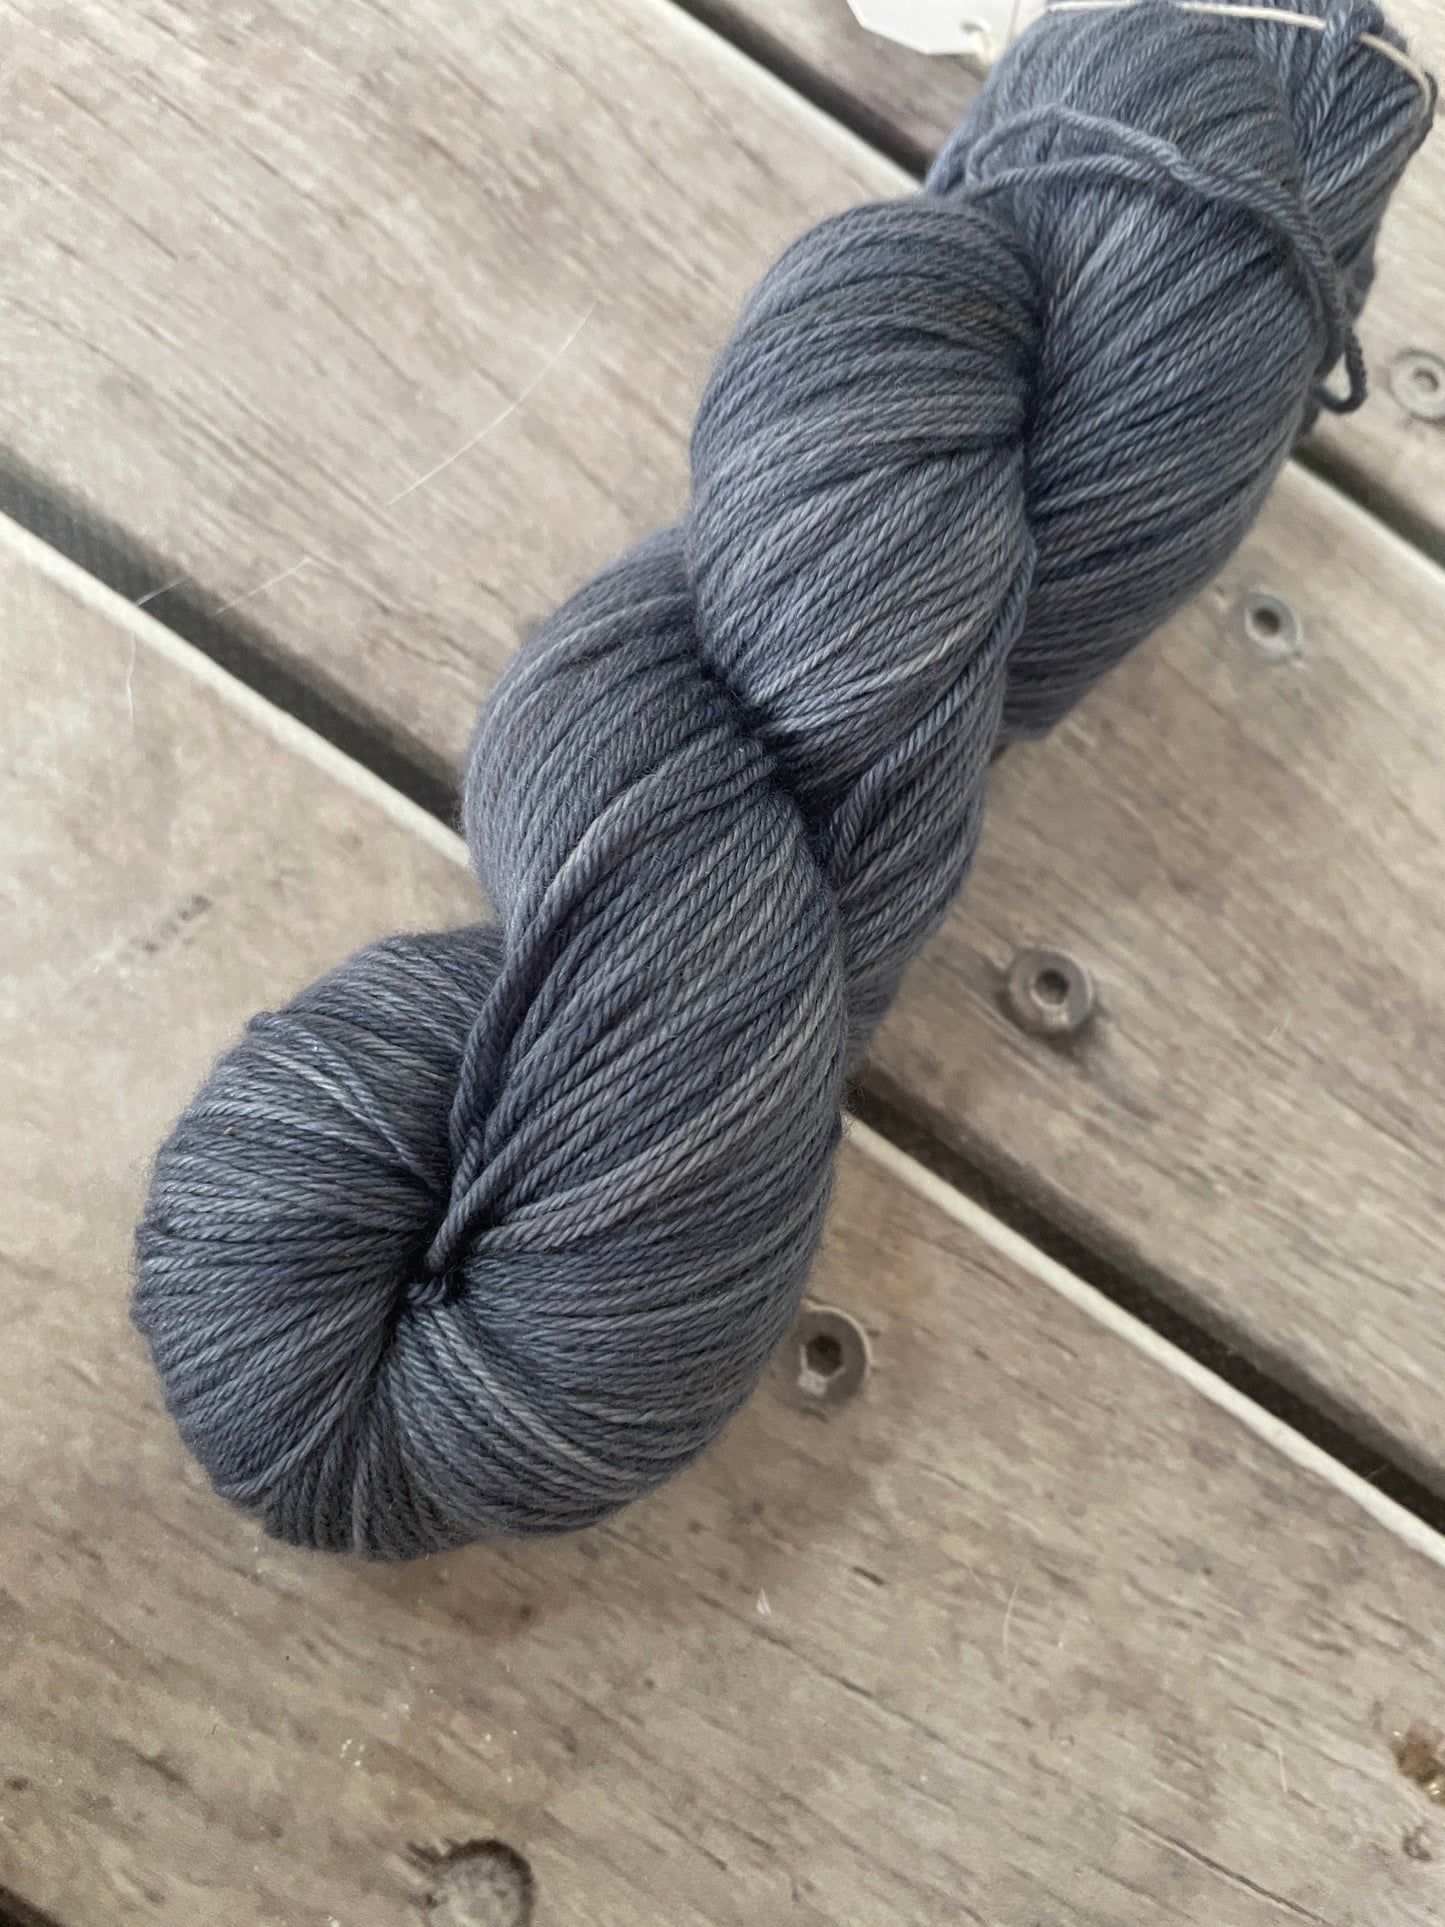 Stormy Skies - Darjeeling 4 ply sock yarn in merino and nylon